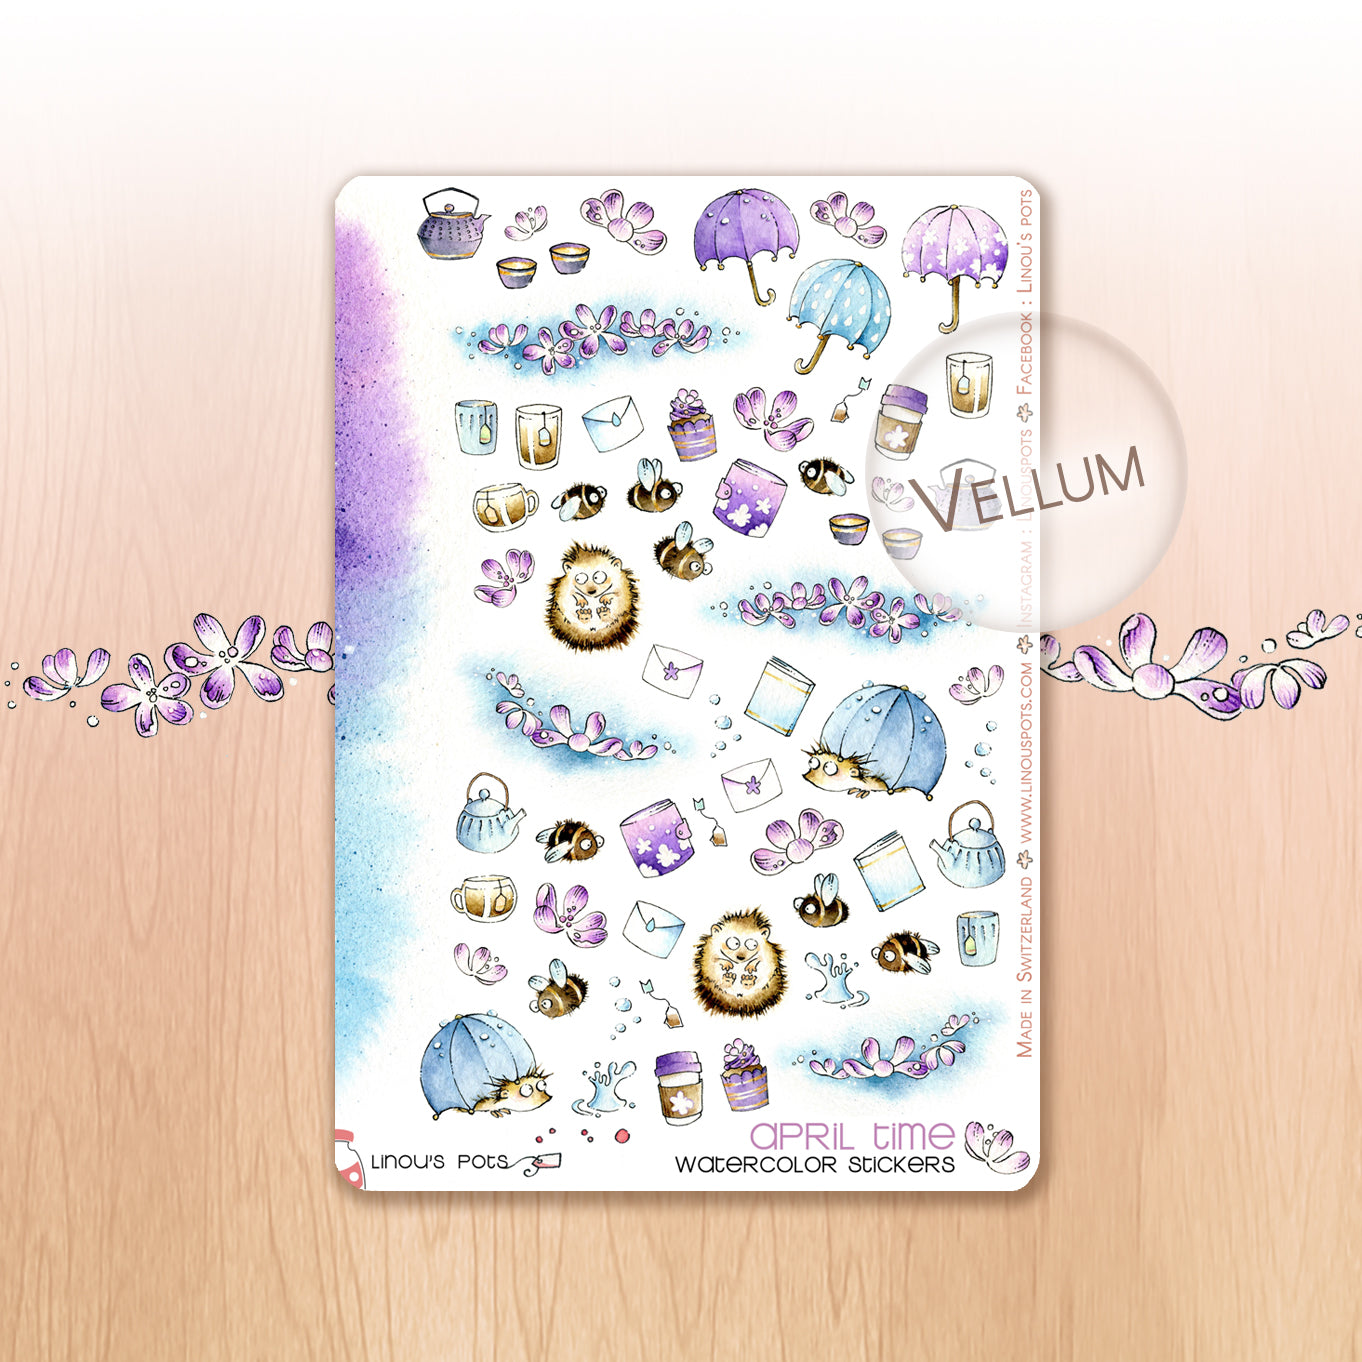 Buzzing In The Rain - Decorative Watercolor Stickers - Bumblebees, Hedgehogs, Umbrellas